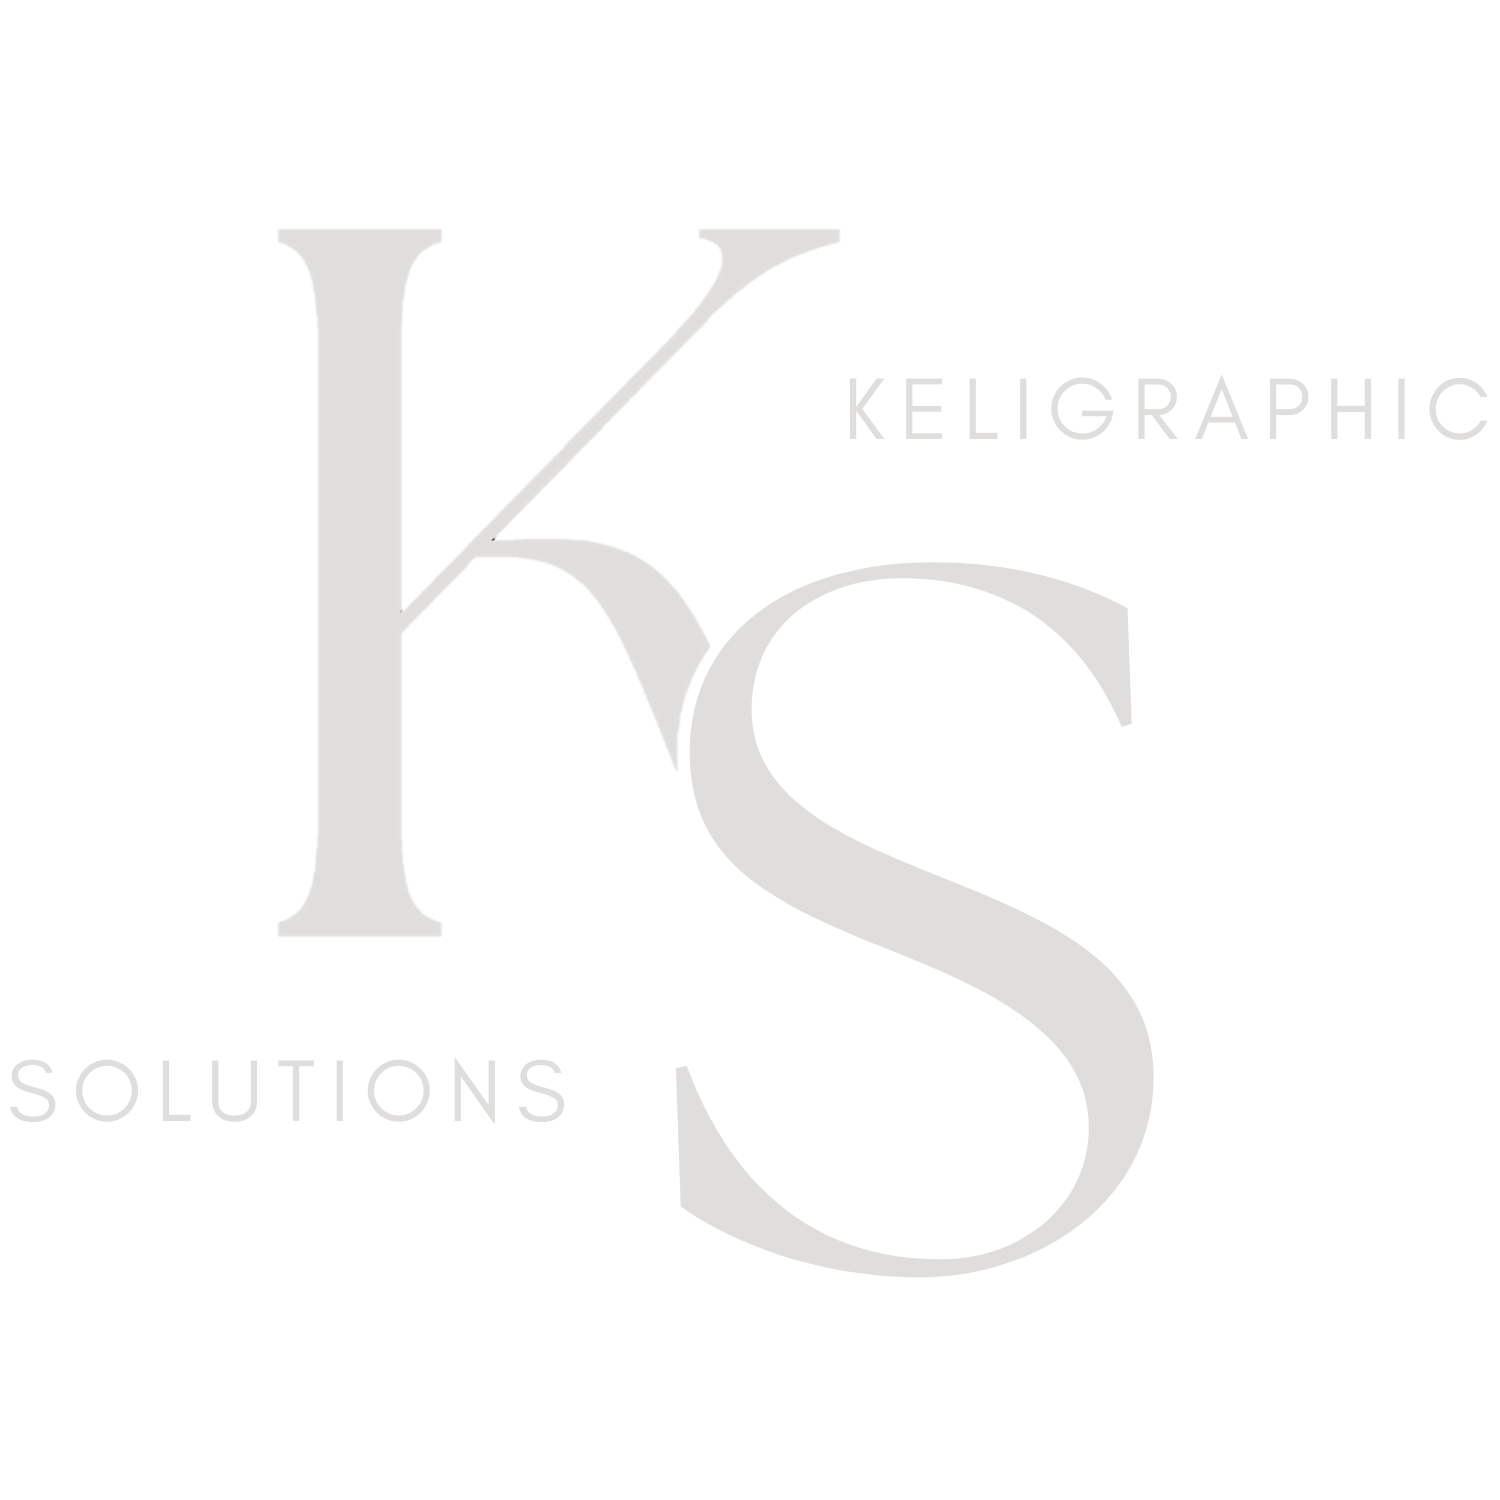 Keligraphic Solutions